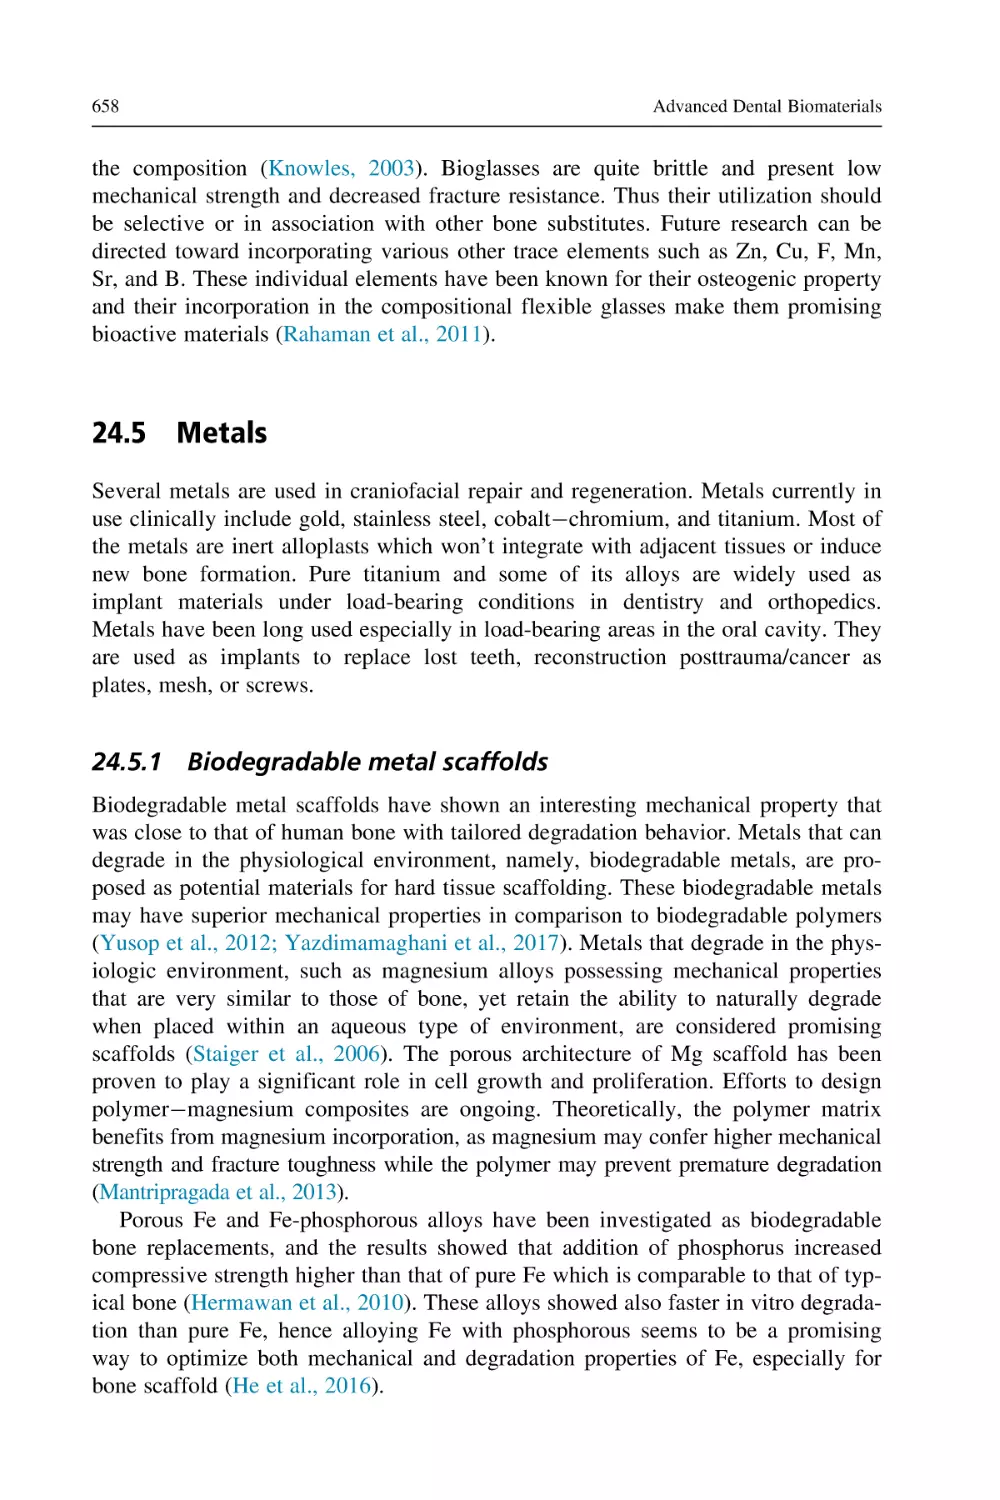 24.5 Metals
24.5.1 Biodegradable metal scaffolds